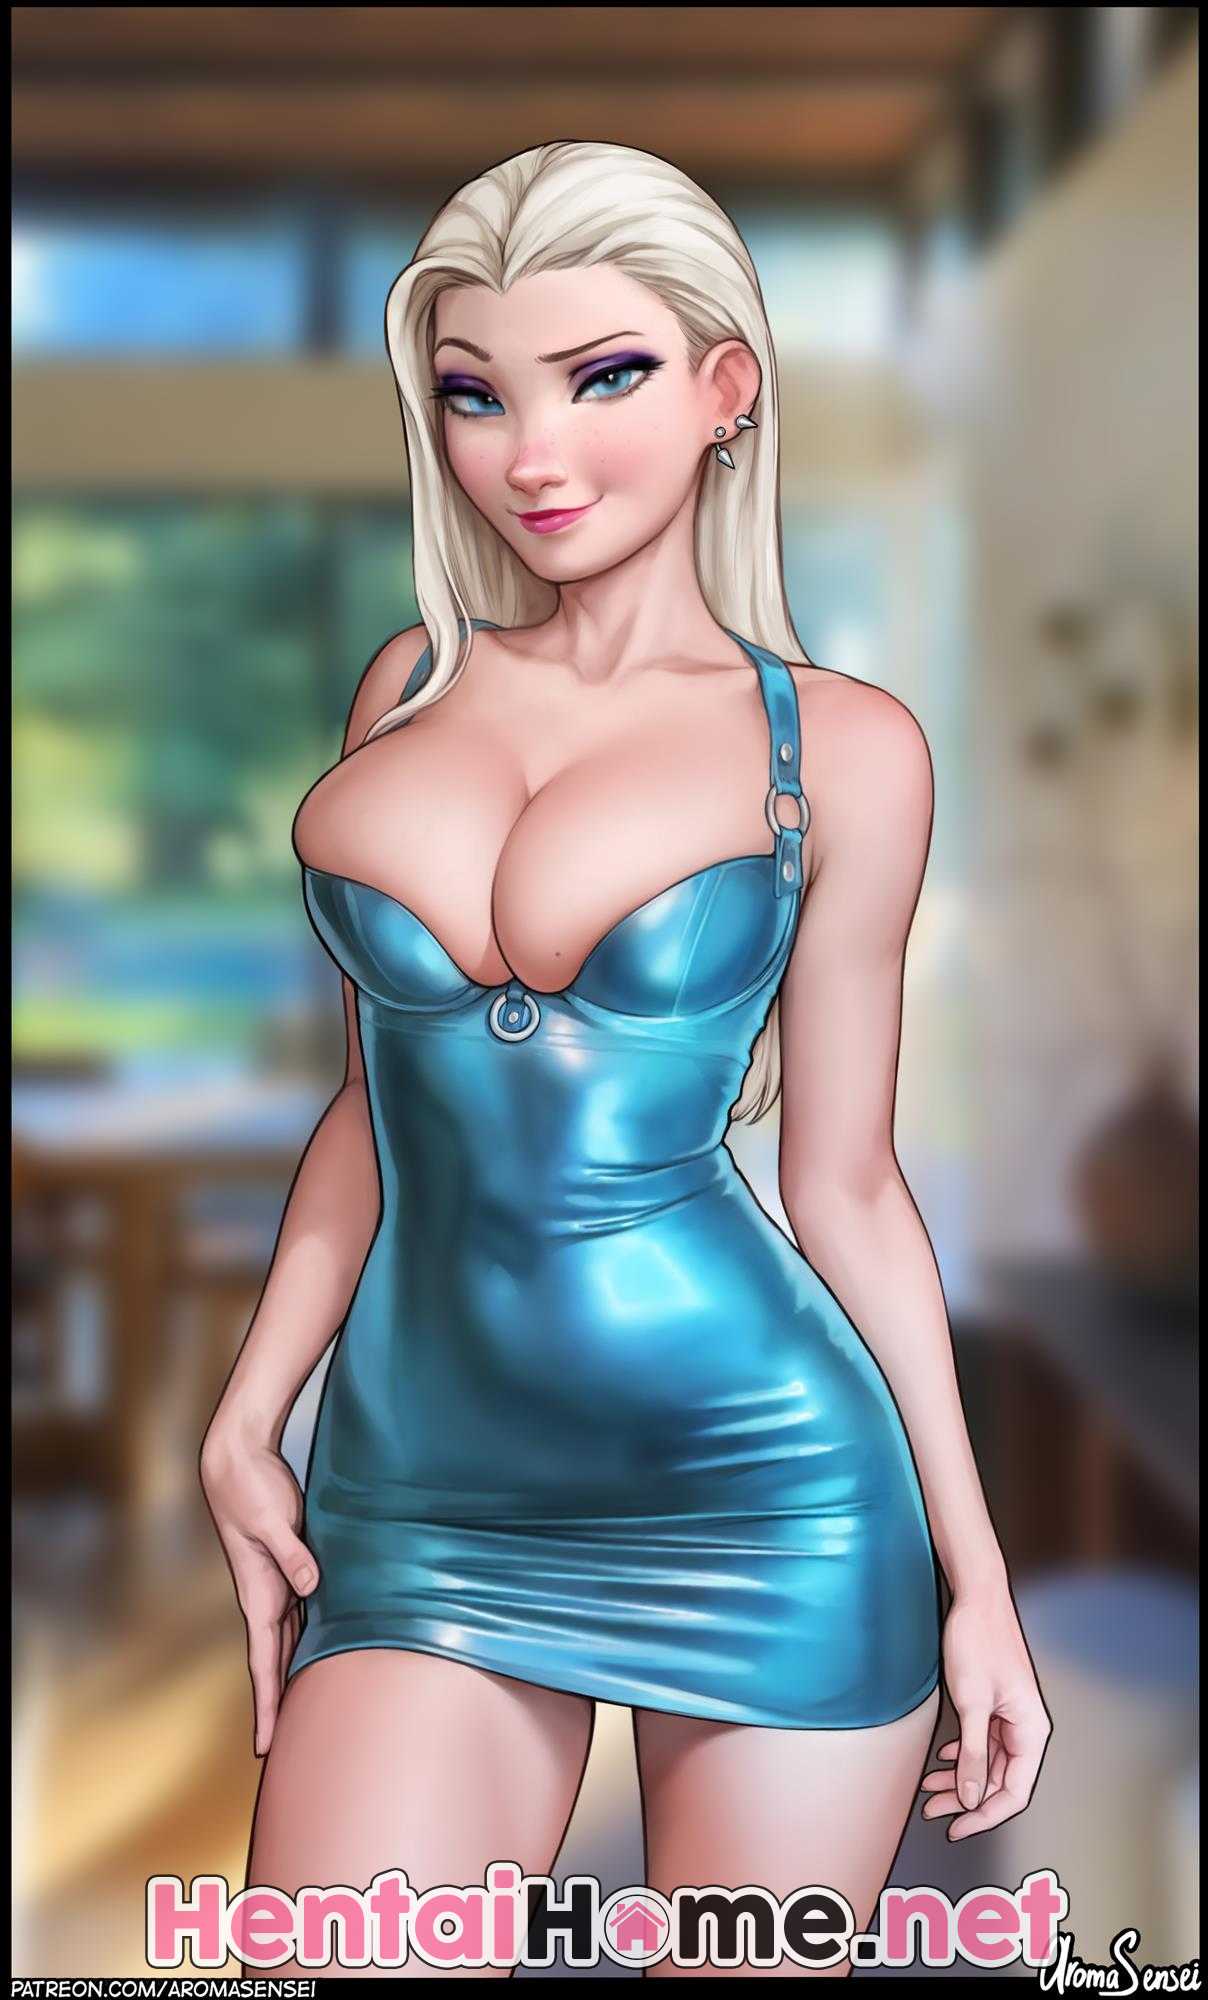 O novo vestido de Elsa